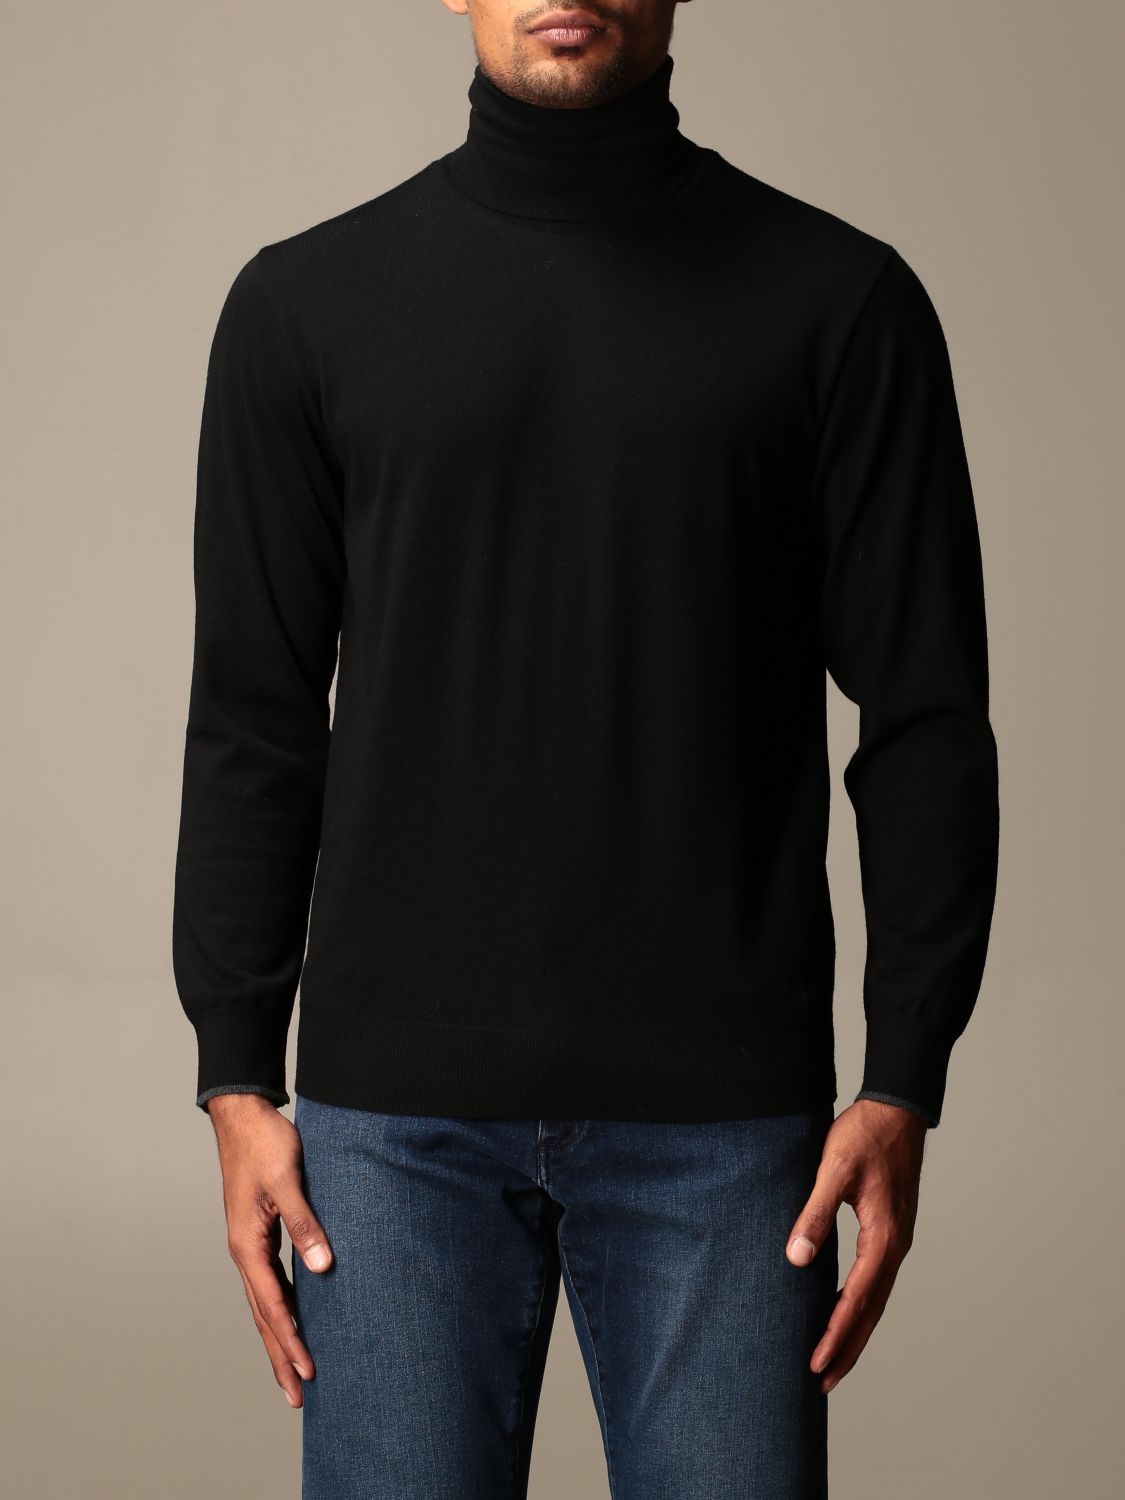 PAUL & SHARK: wool turtleneck - Black | PAUL & SHARK sweater A18P1509 ...